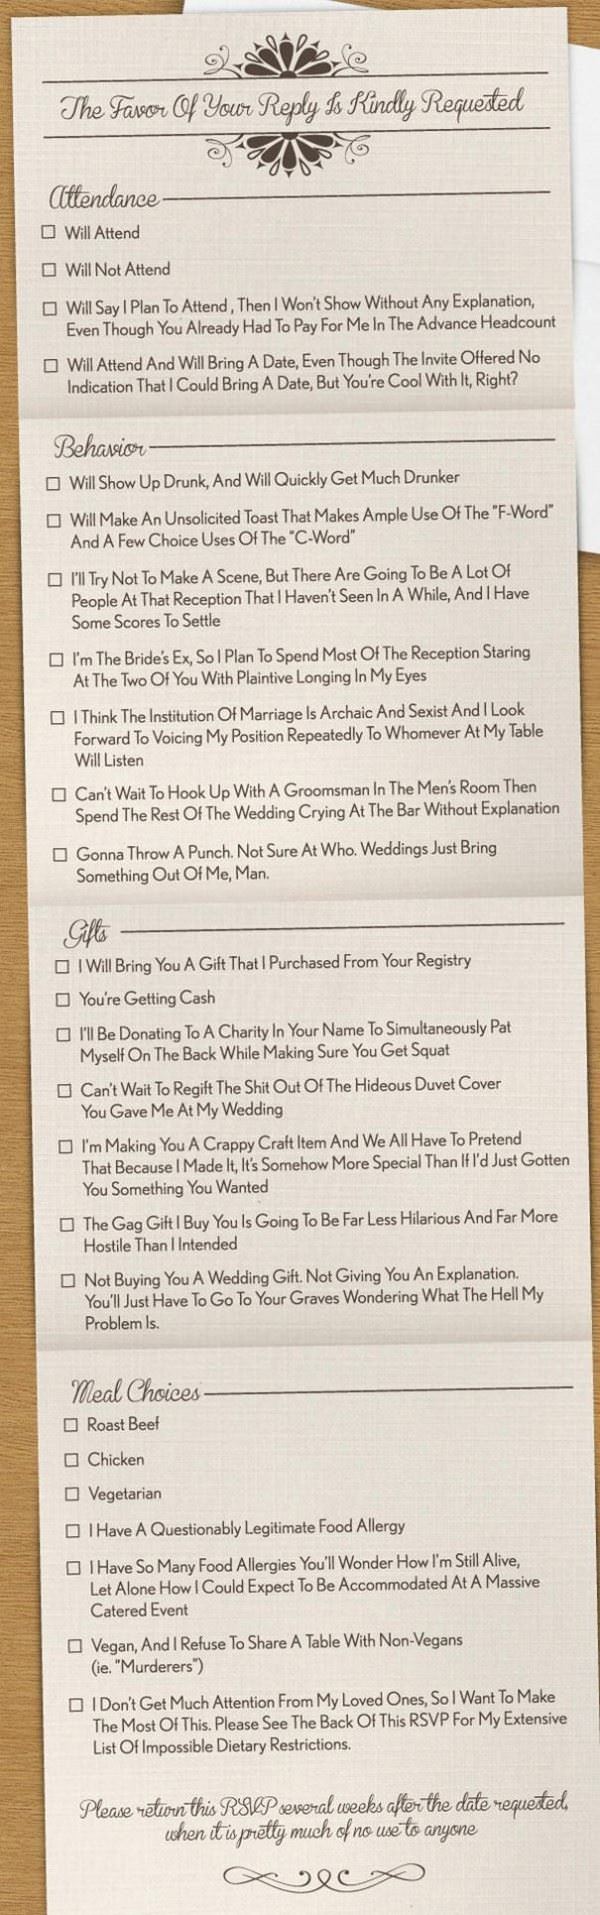 honest wedding invitation funny picture